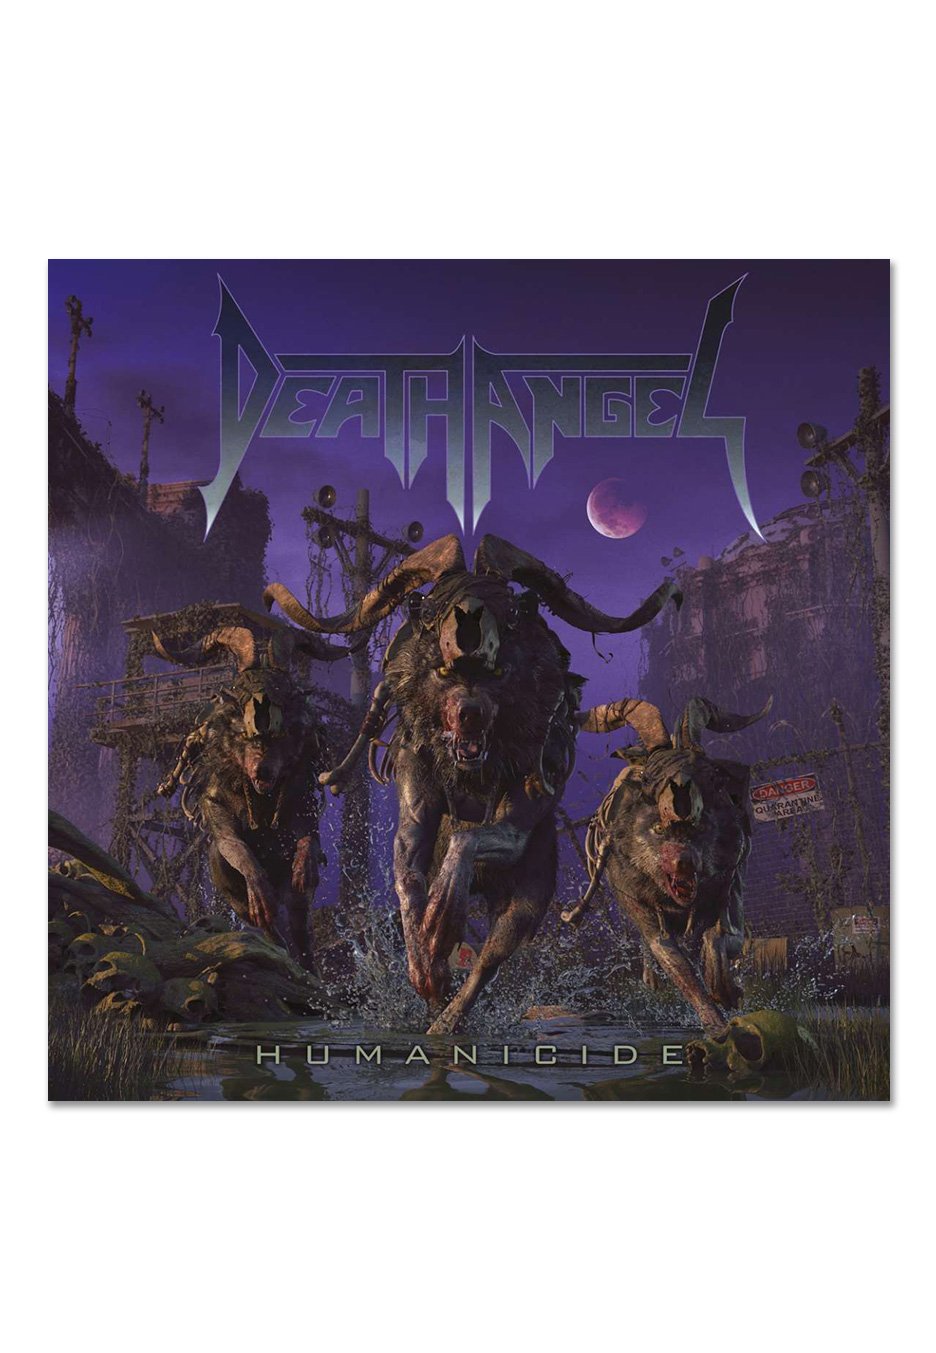 Death Angel - Humanicide Ltd. Clear w/ Purple - Splattered 2 Vinyl